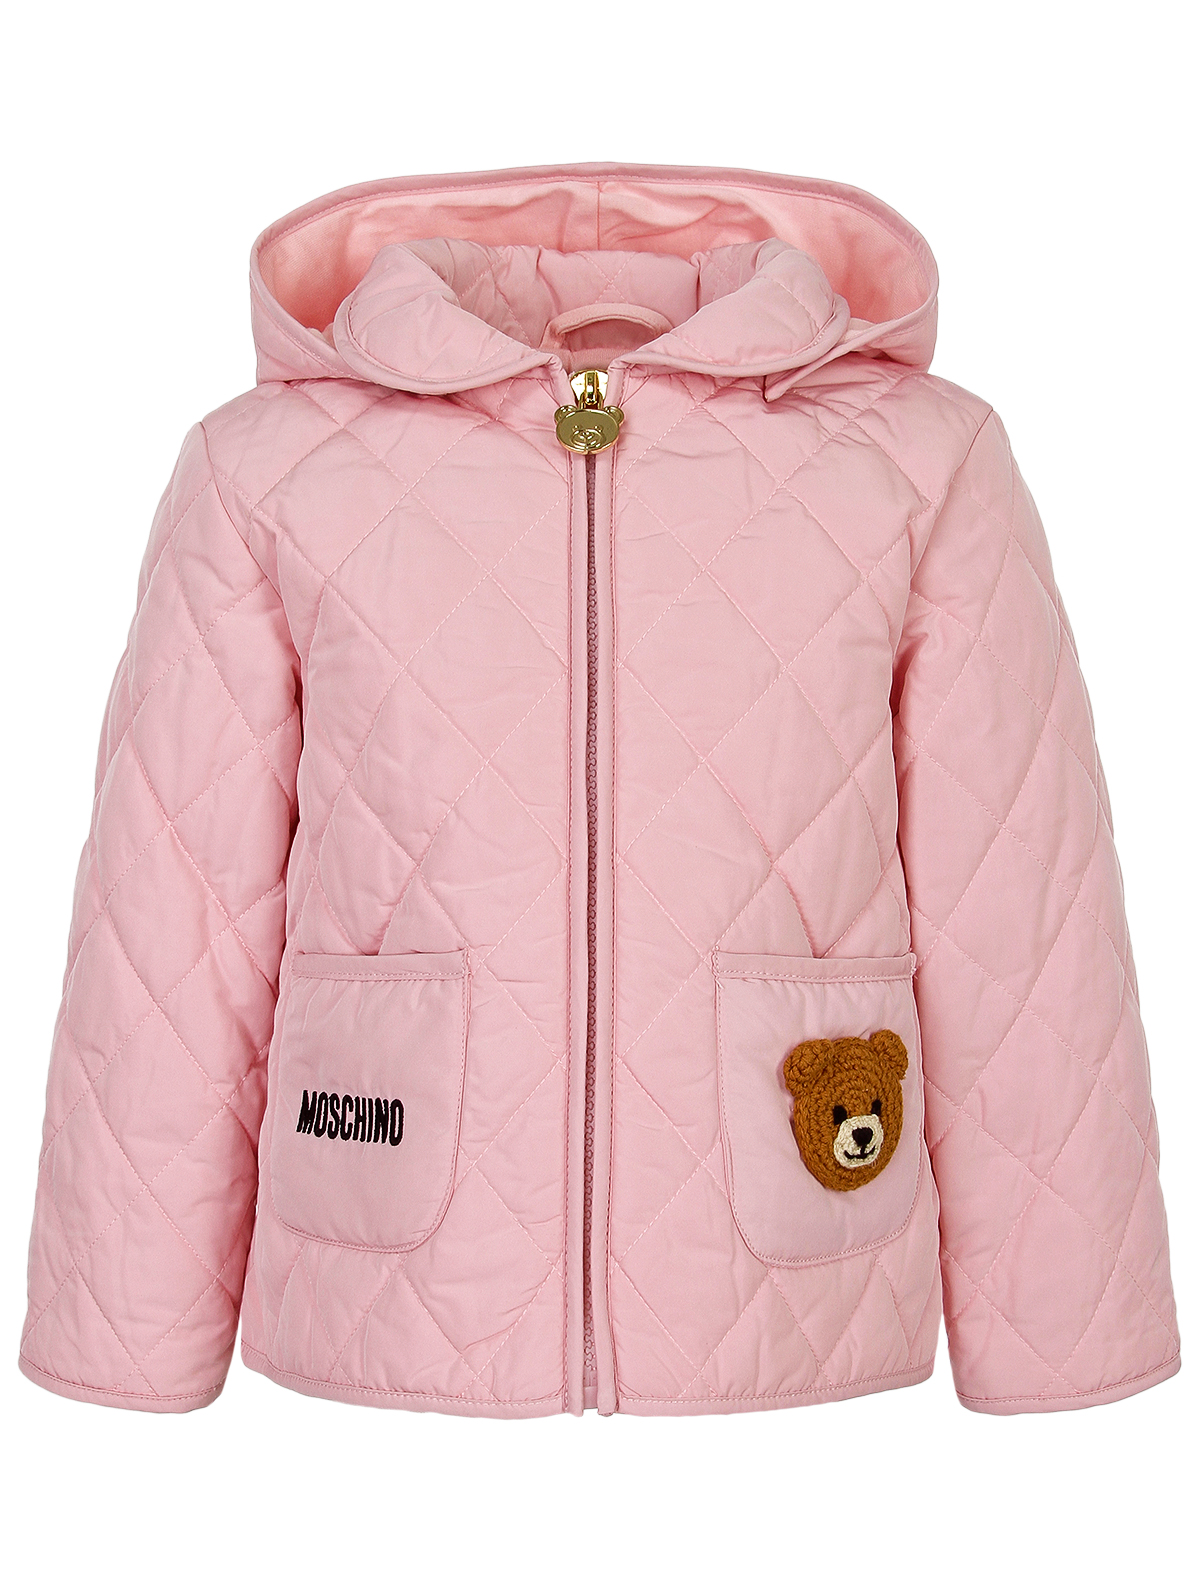 Куртка Moschino 2543935, цвет розовый, размер 2 1074509371649 - фото 1